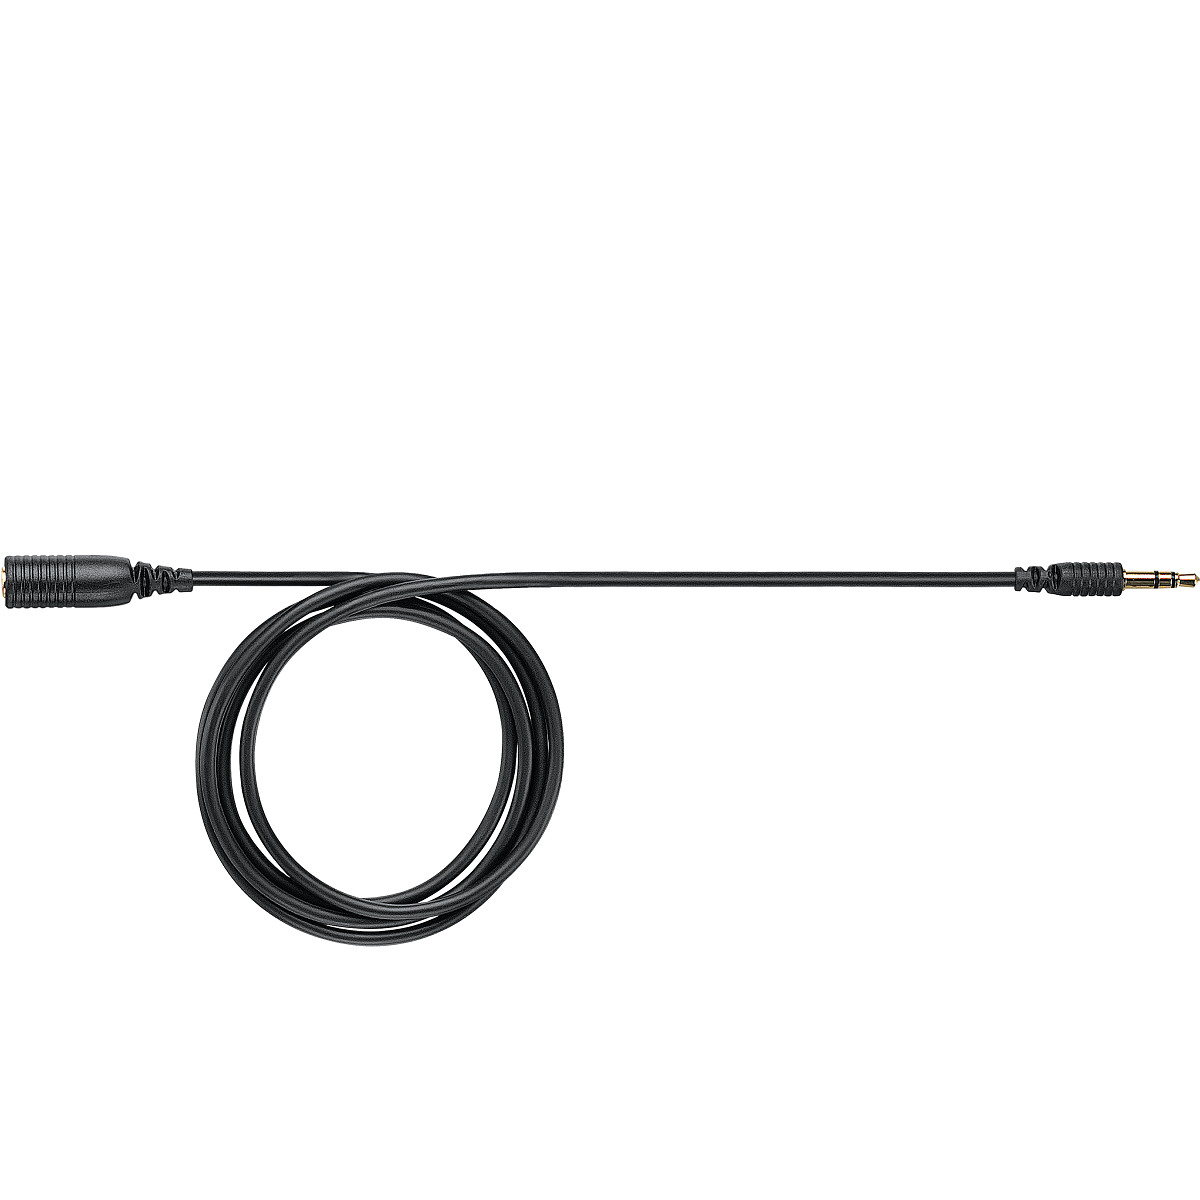 Cable extensión jack 3,5mm macho/hembra para earphones de 91cm. Negro.